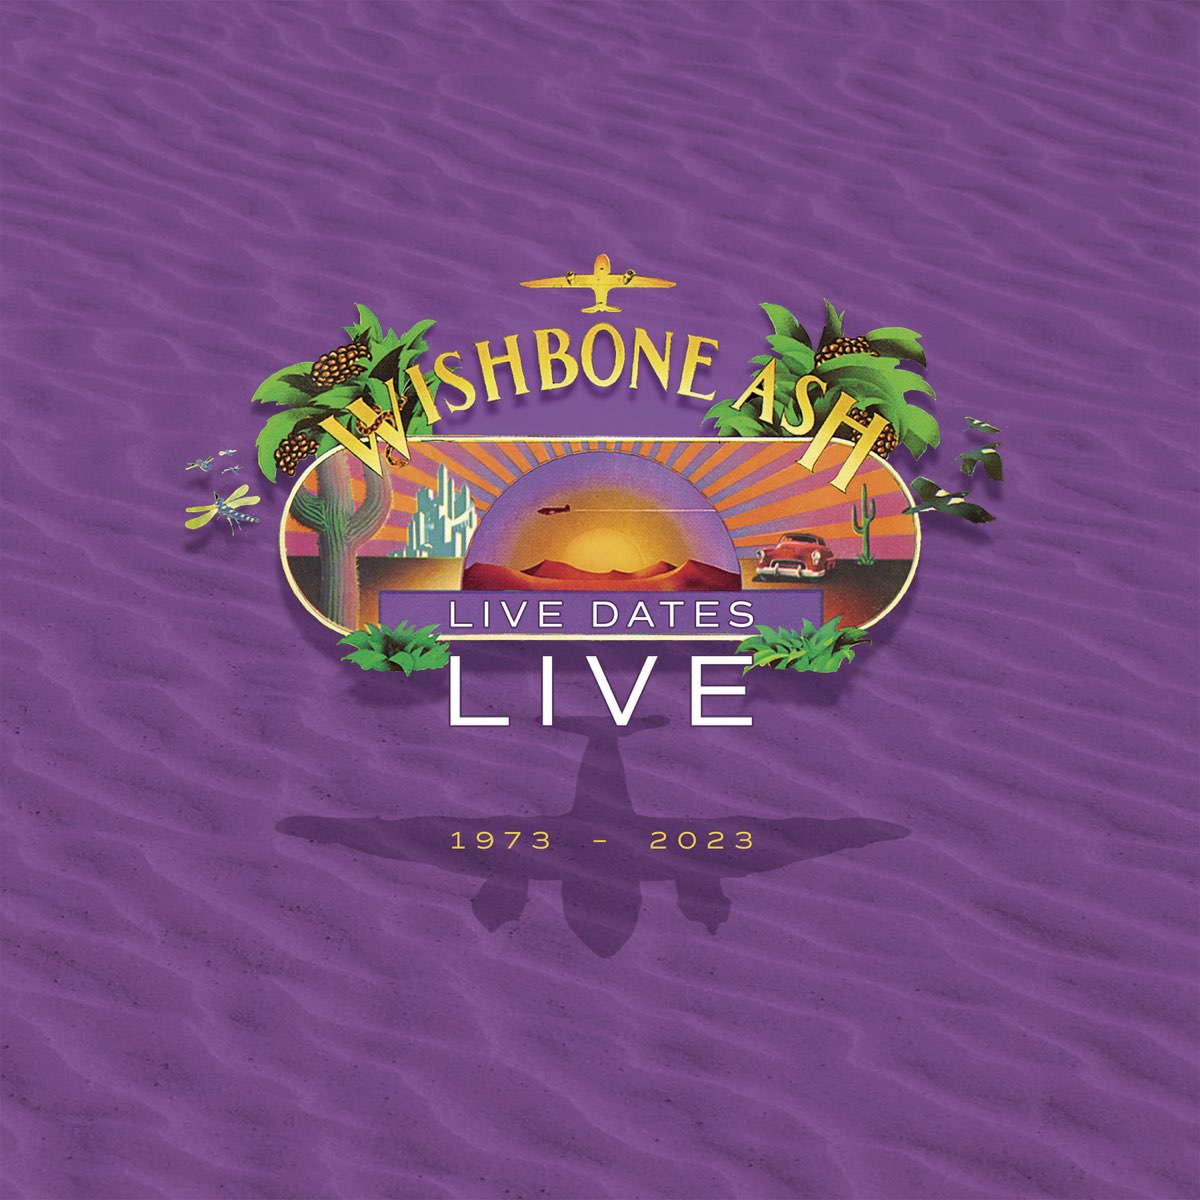 ‎Live Dates Live - Album by Wishbone Ash - Apple Music